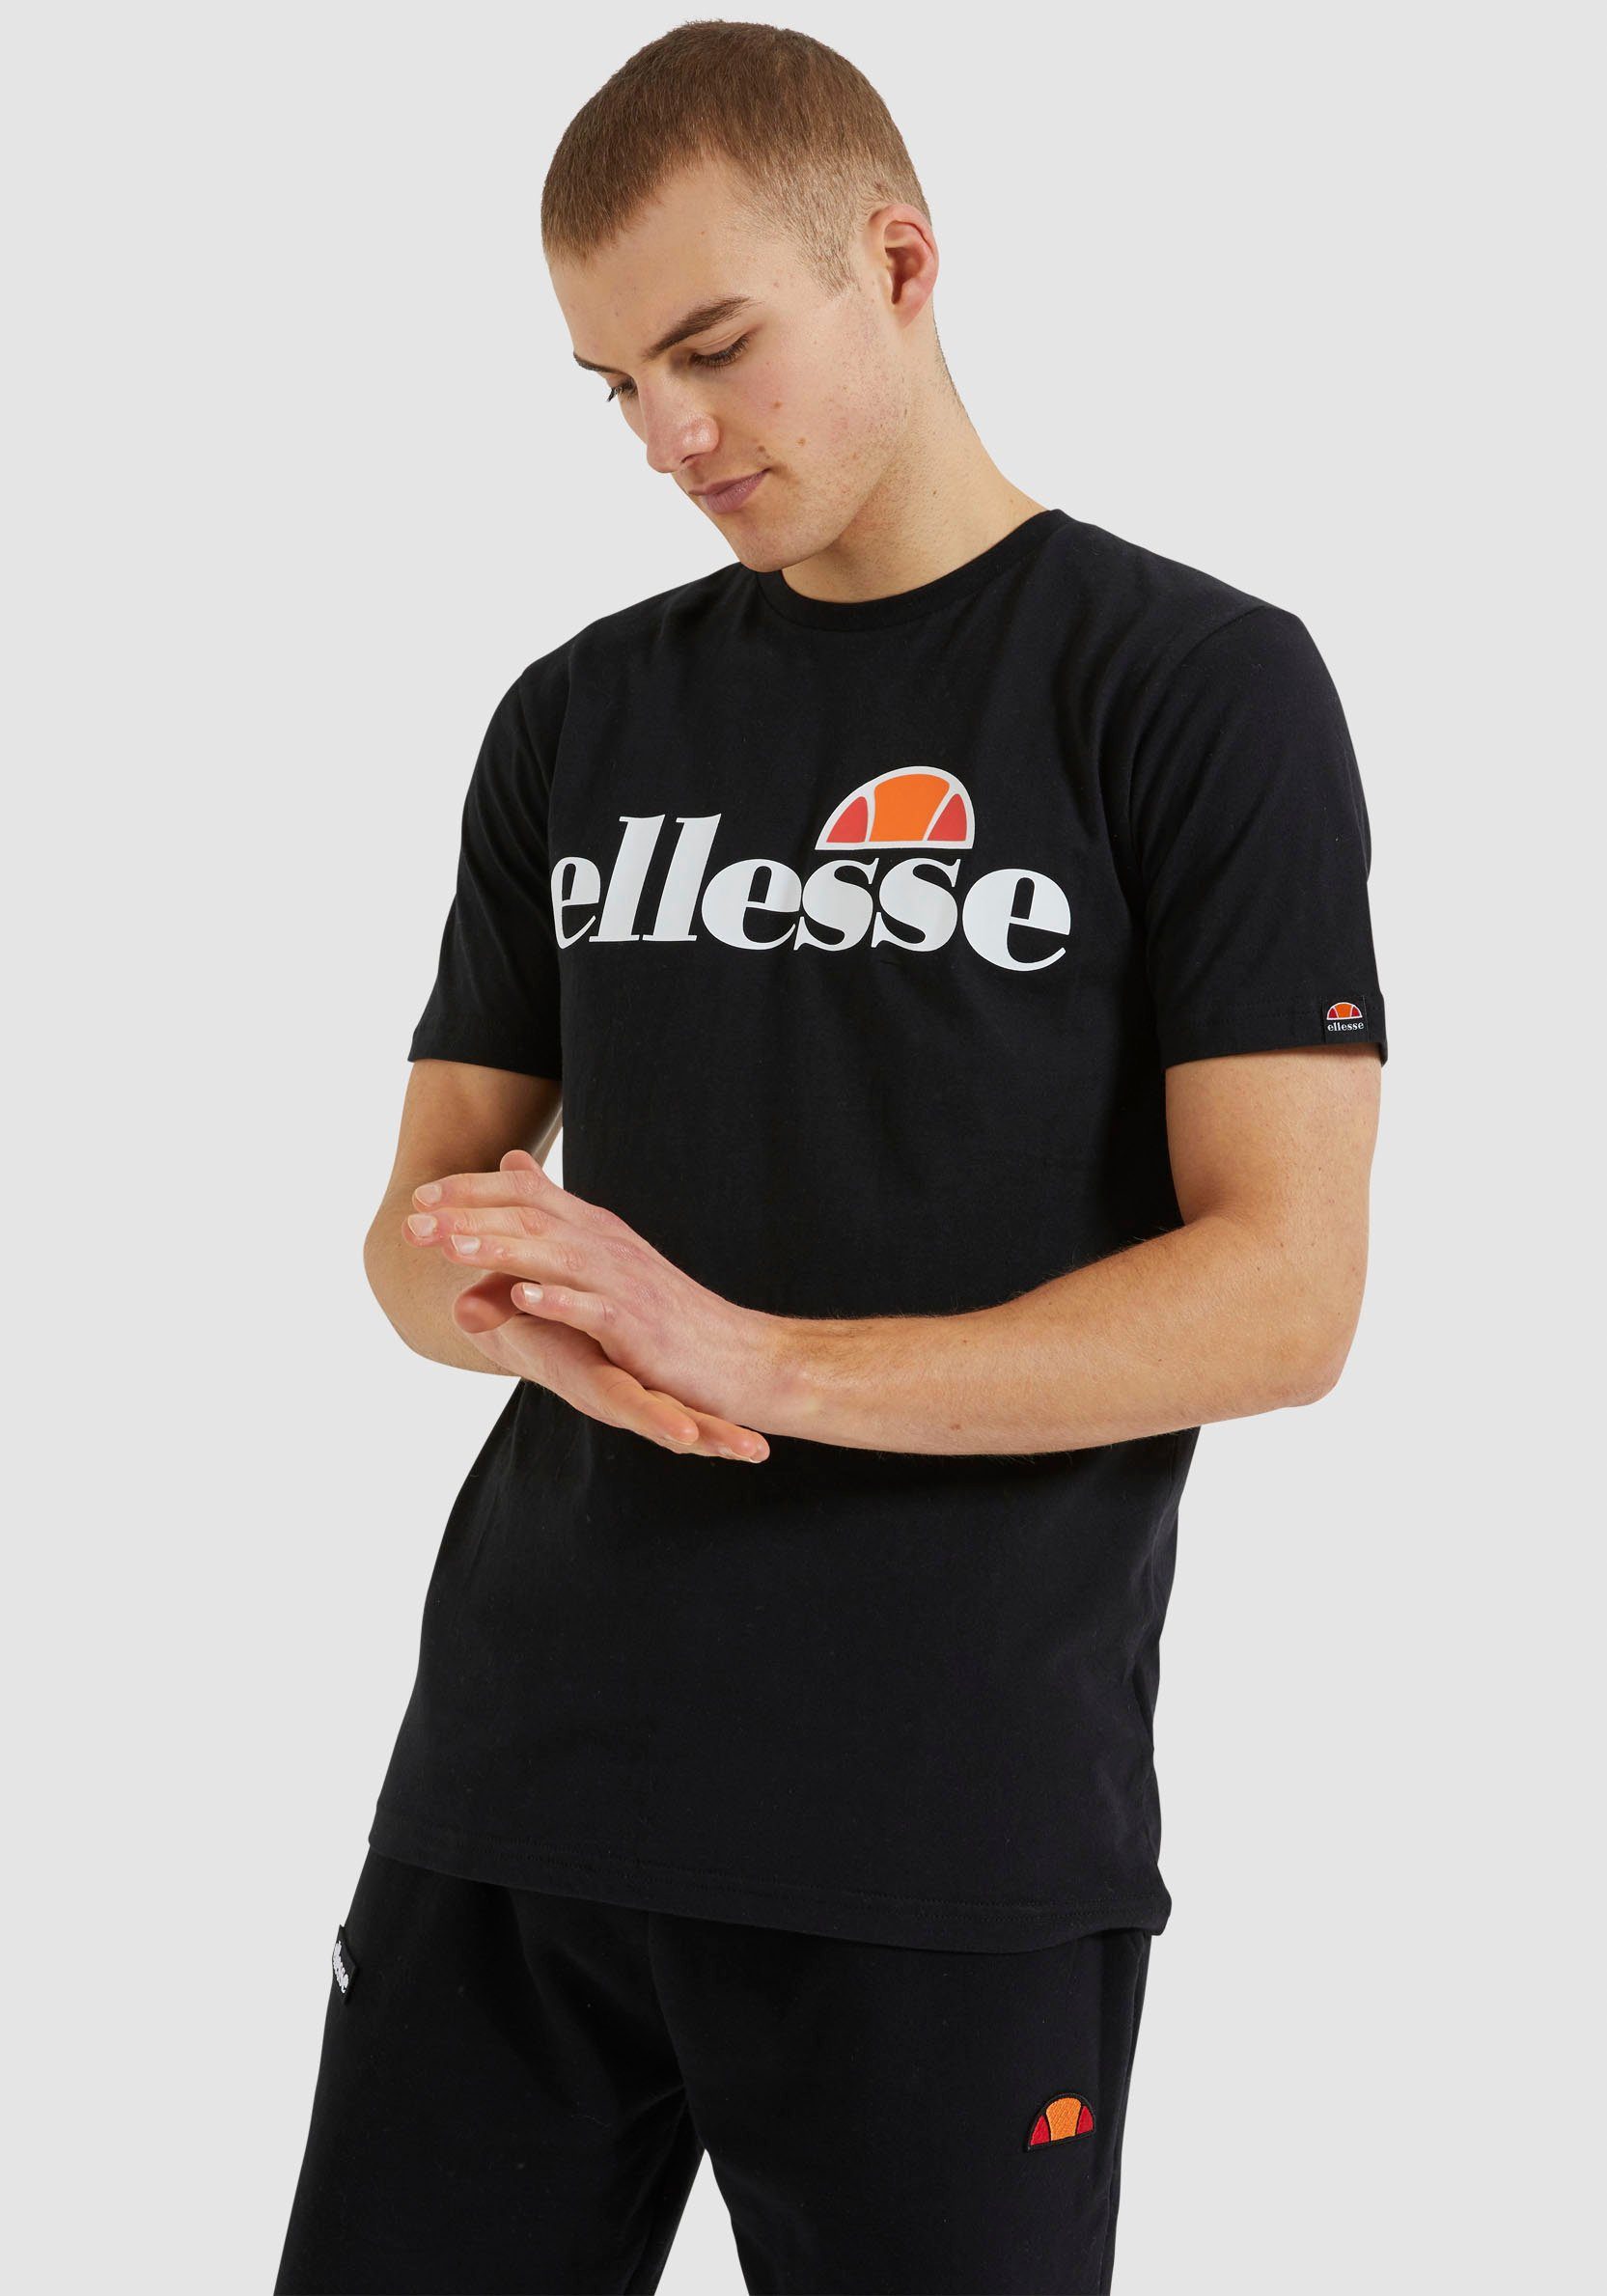 SL TEE Ellesse T-Shirt schwarz PRADO